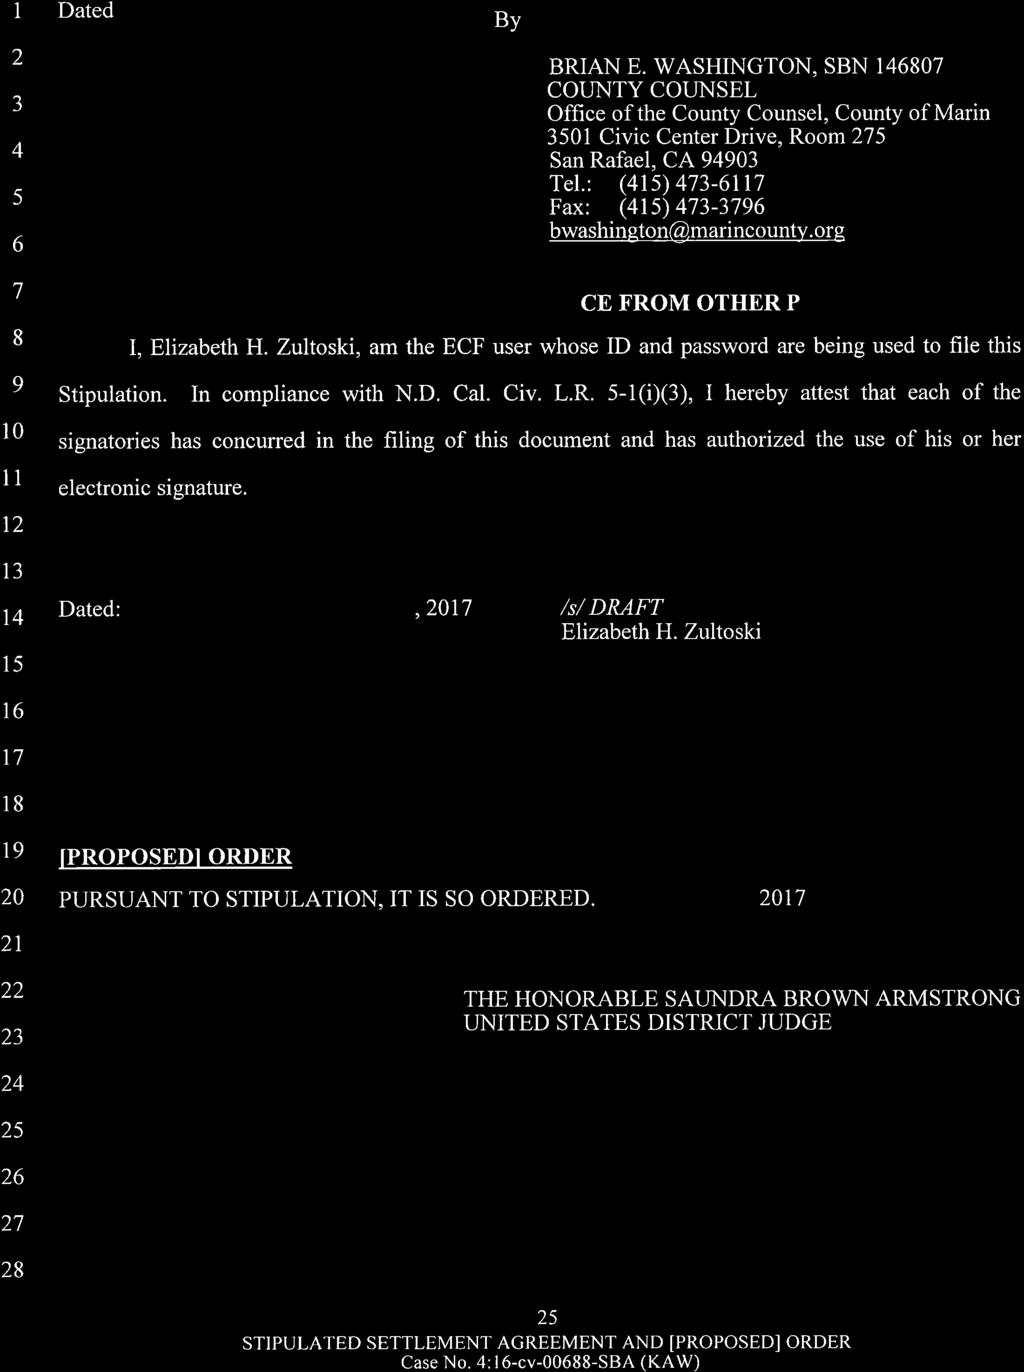 Case 4:16-cv-00688-SBA Document